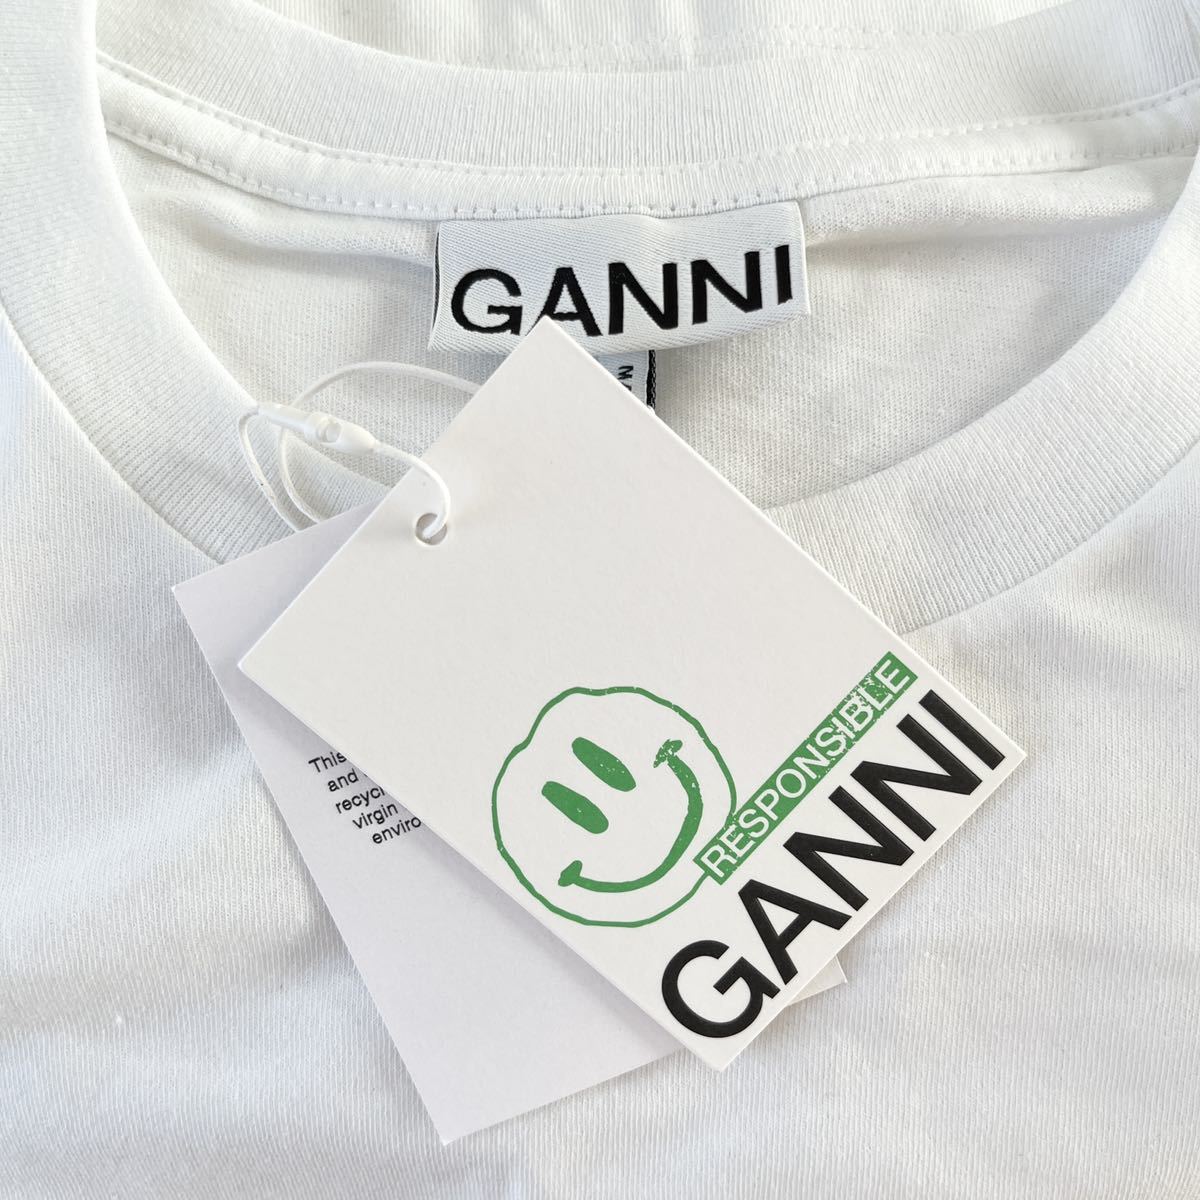 GANNI ガニー ロゴプリント 半袖Tシャツ カットソー ホワイト Sサイズ